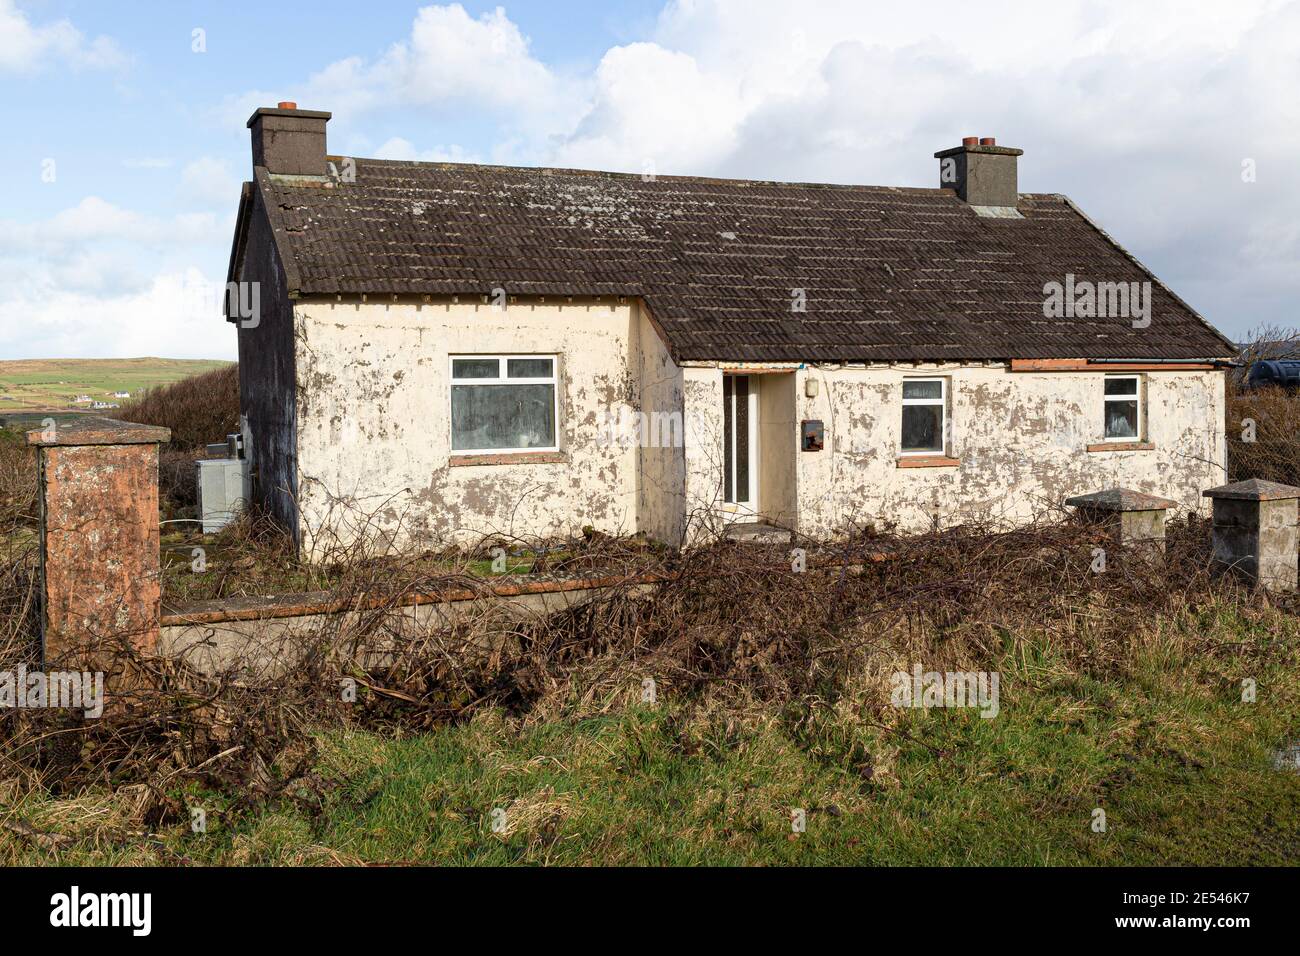 Abandoned Bungalow in need of repair, Ireland Stock Photo